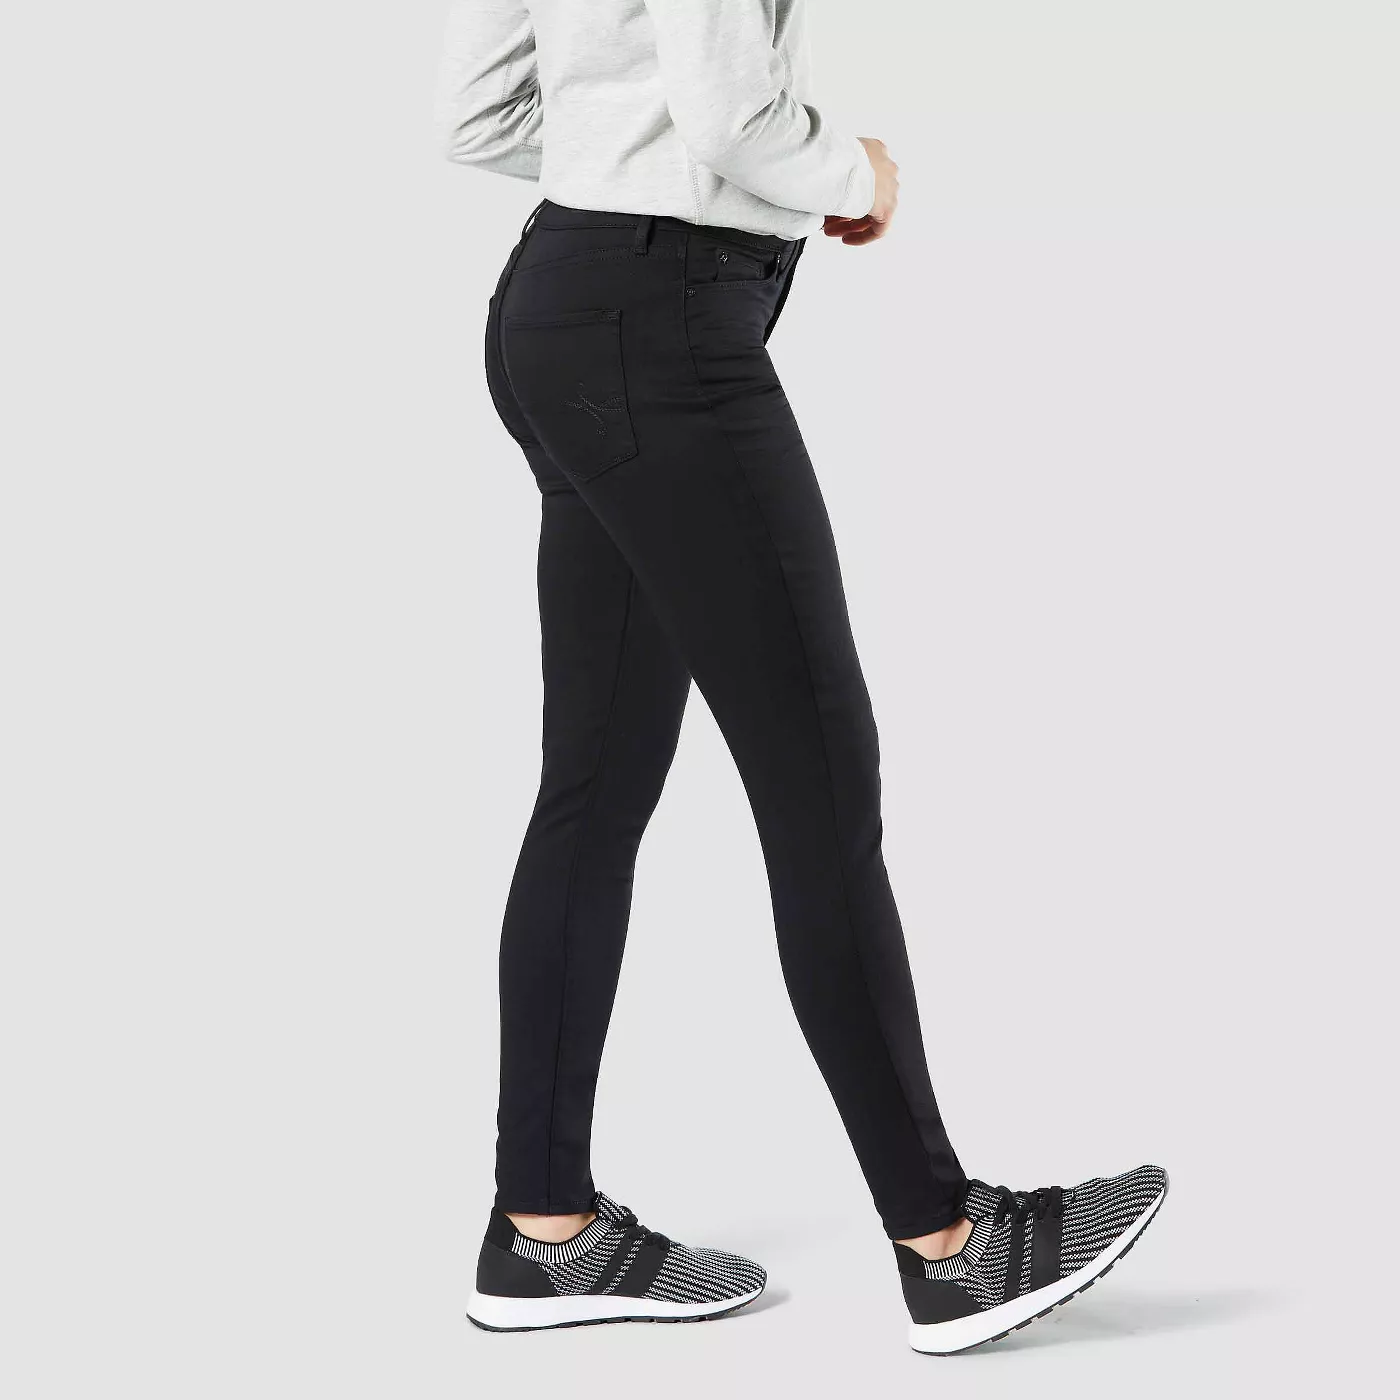 DENIZEN® from Levi's® Women's High-Rise Skinny Jeans - image 2 of 3